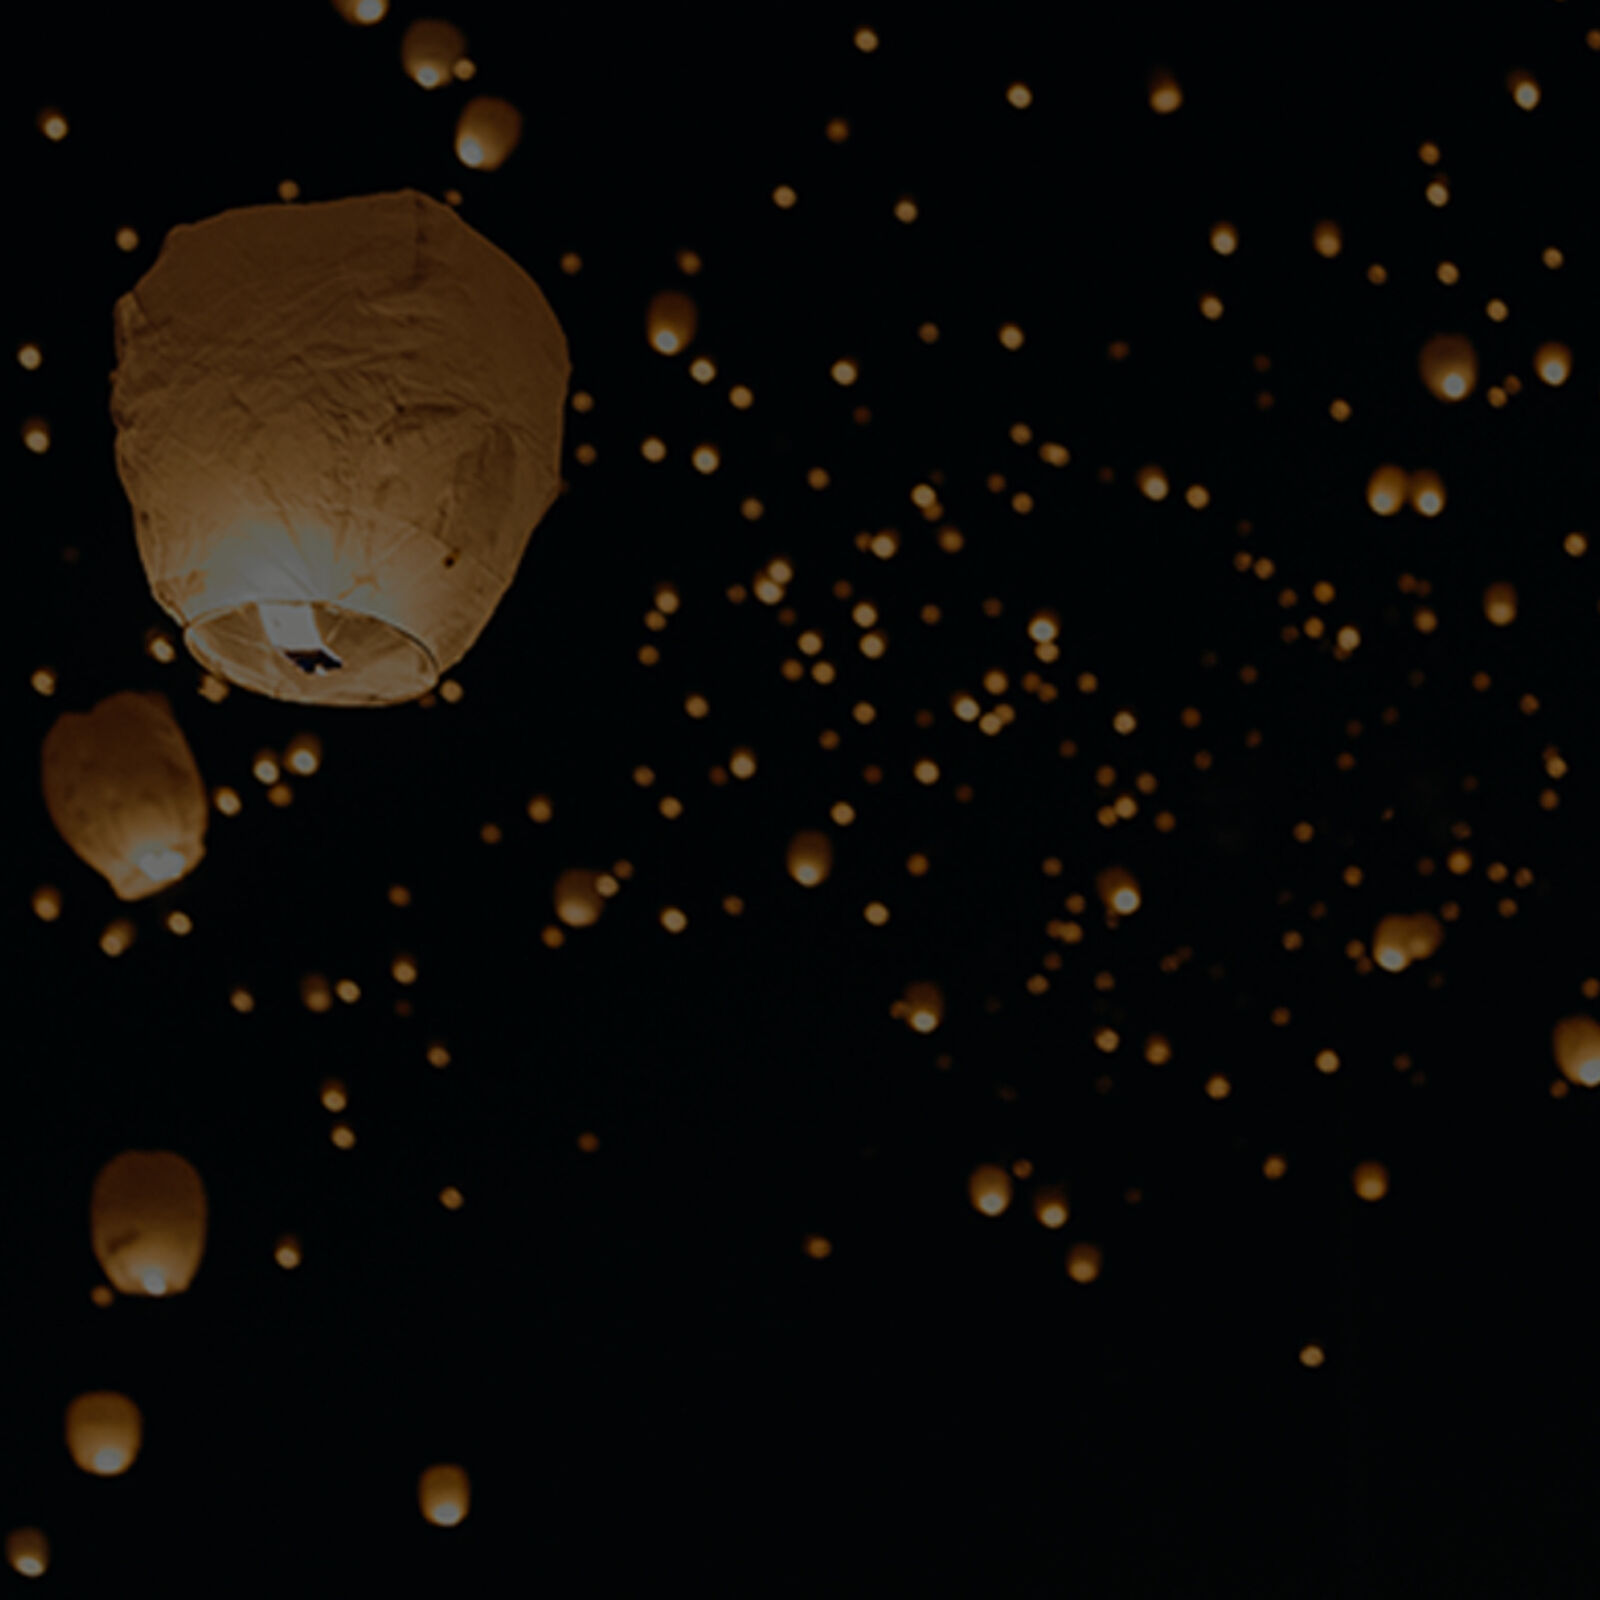 Reimagine website image showing memorial lanterns floating in sky